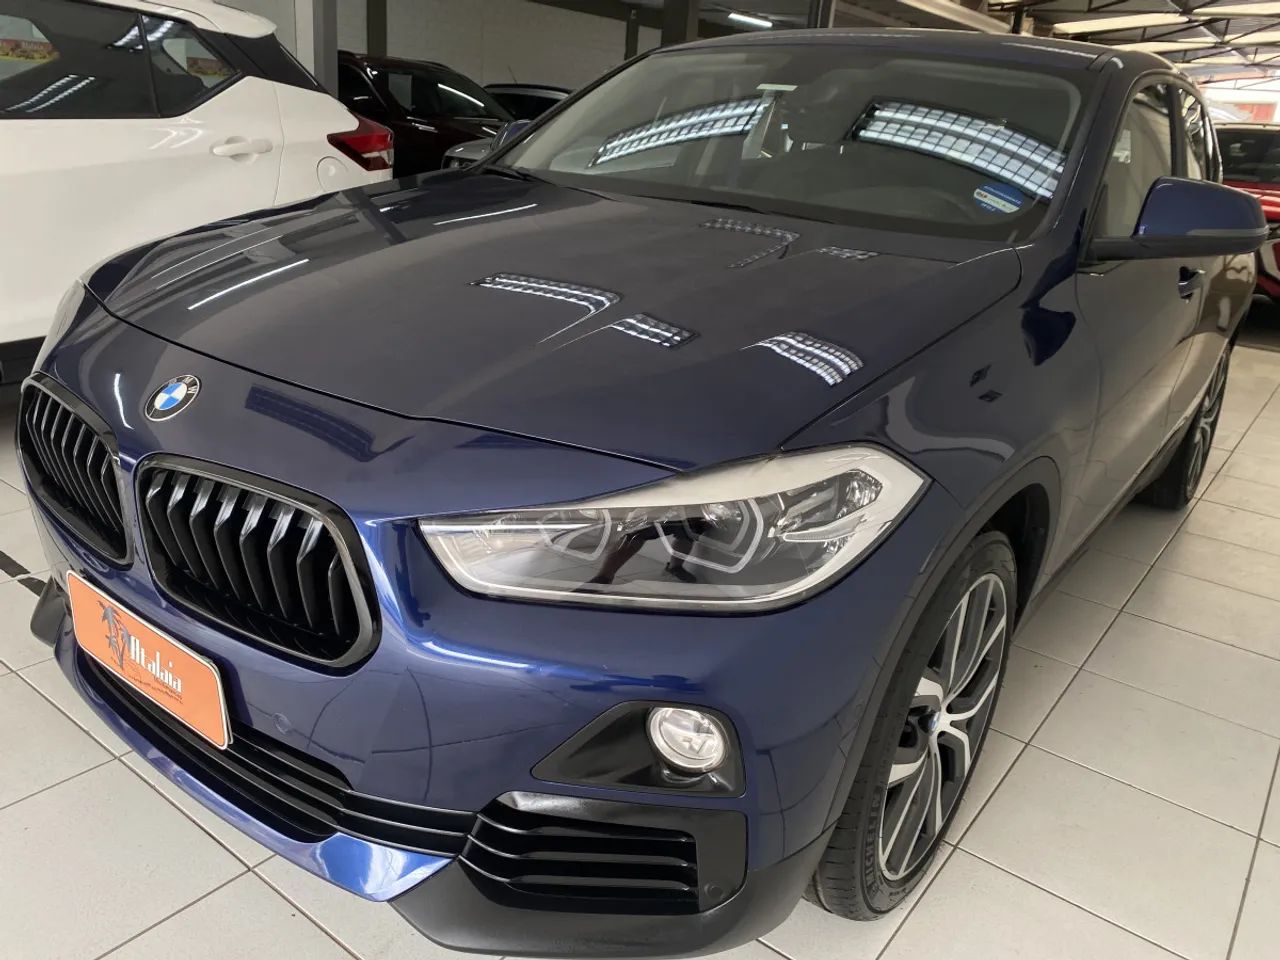 BMW X2 SDRIVE 20i TB Aut 2019